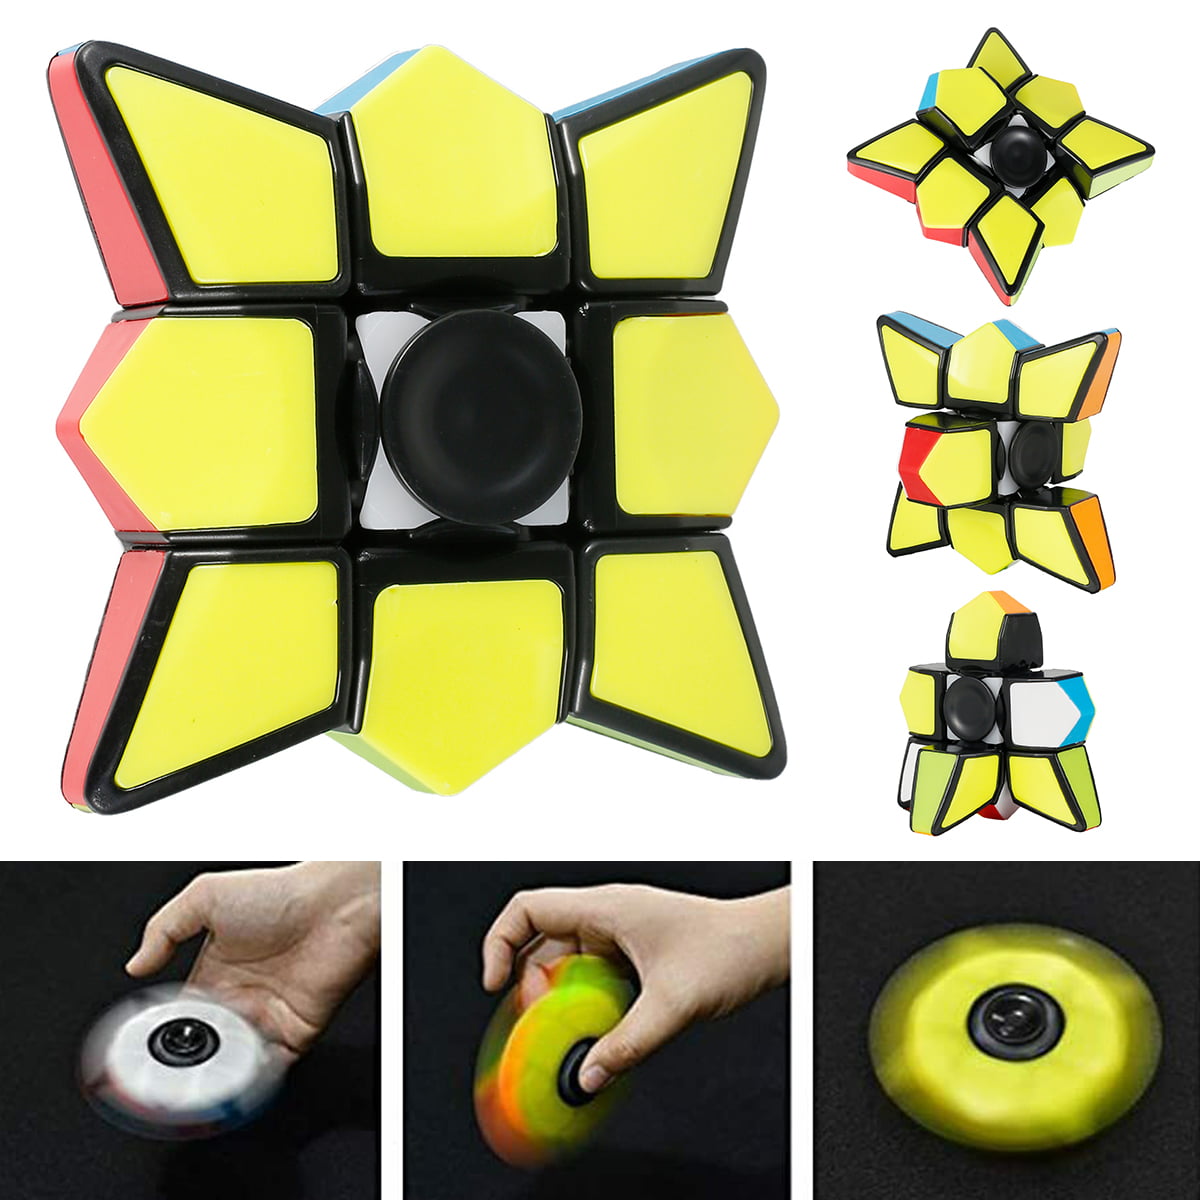 Qiyi Fidget spinner Rubik's cube 1X3X3 Finger Rubik's Cube 